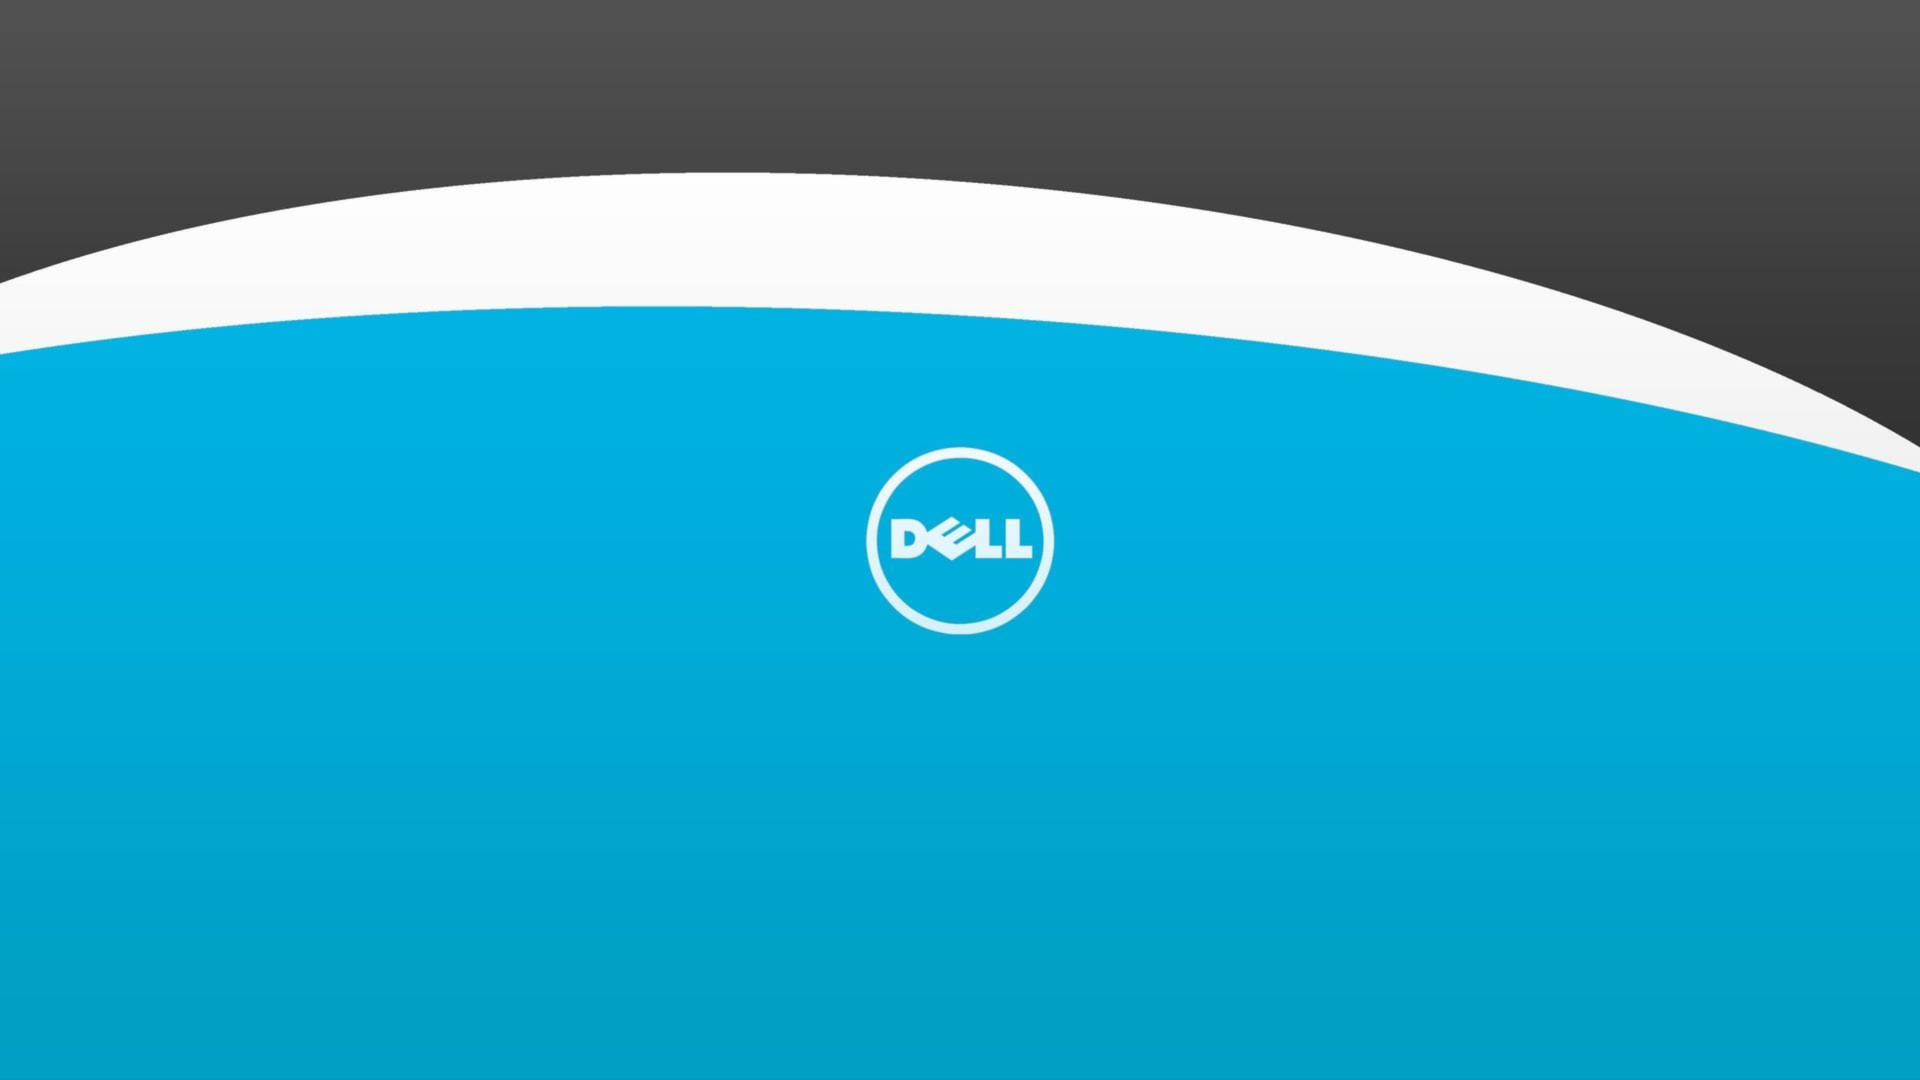 Dell 4k Logo On Blue Background